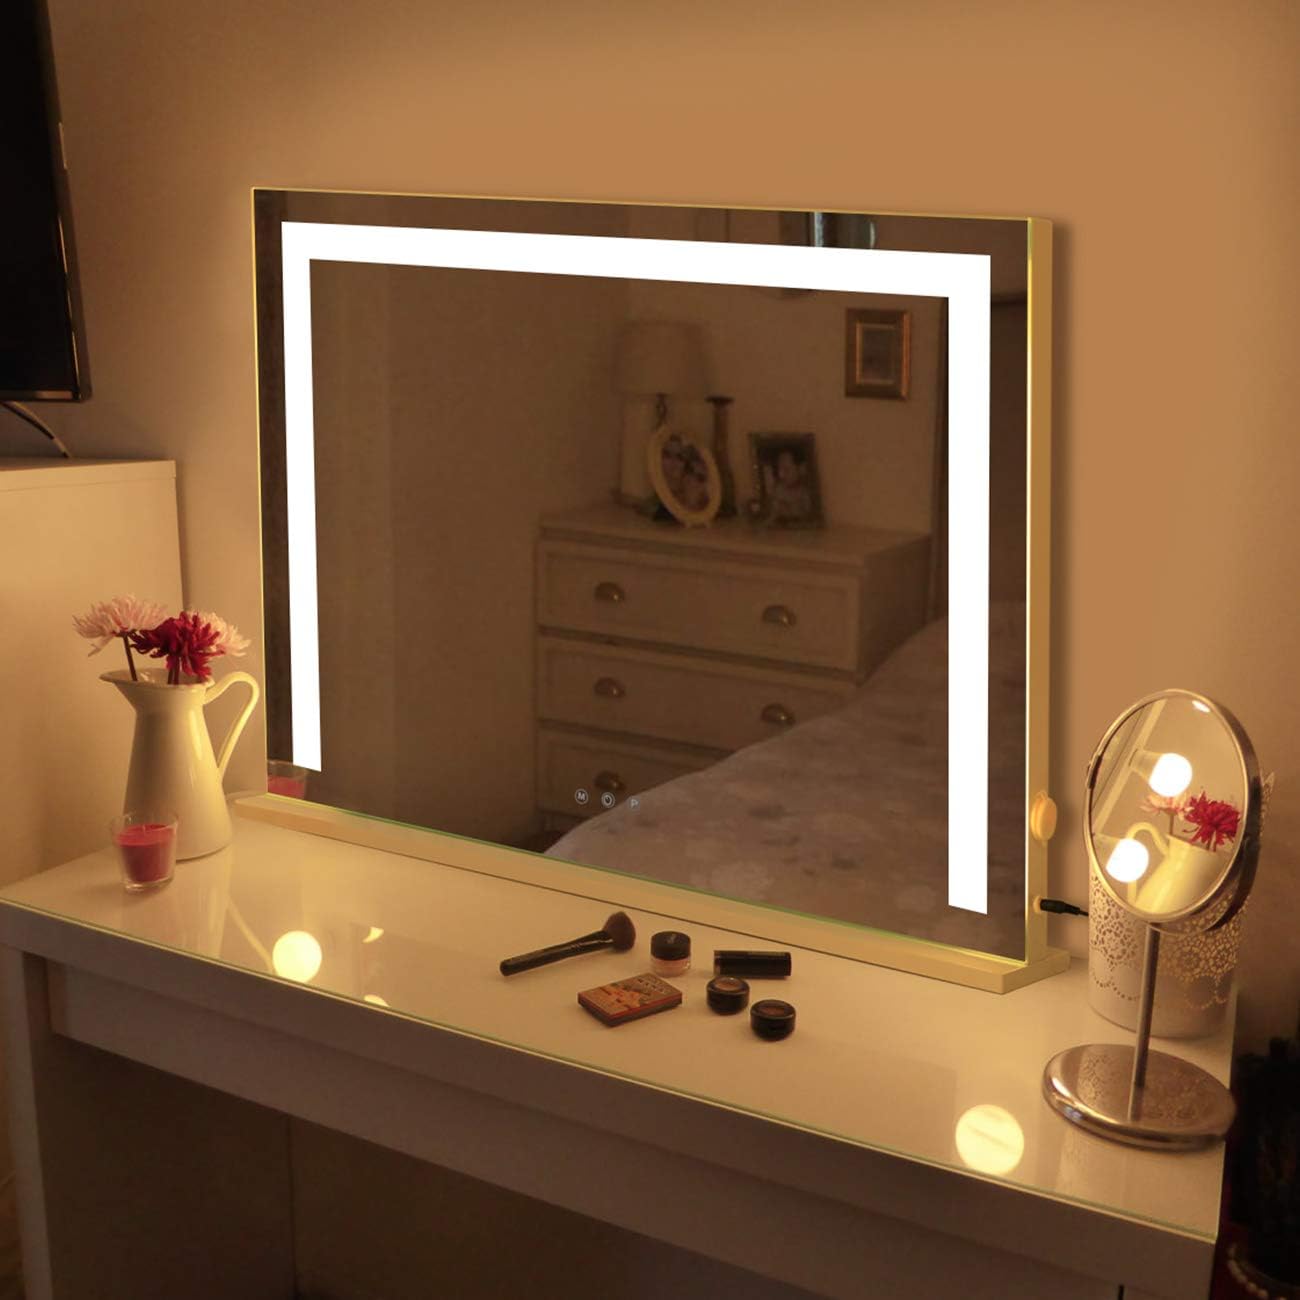 Generic Hompen Makeup Mirror With, Lighted Make Up Vanity